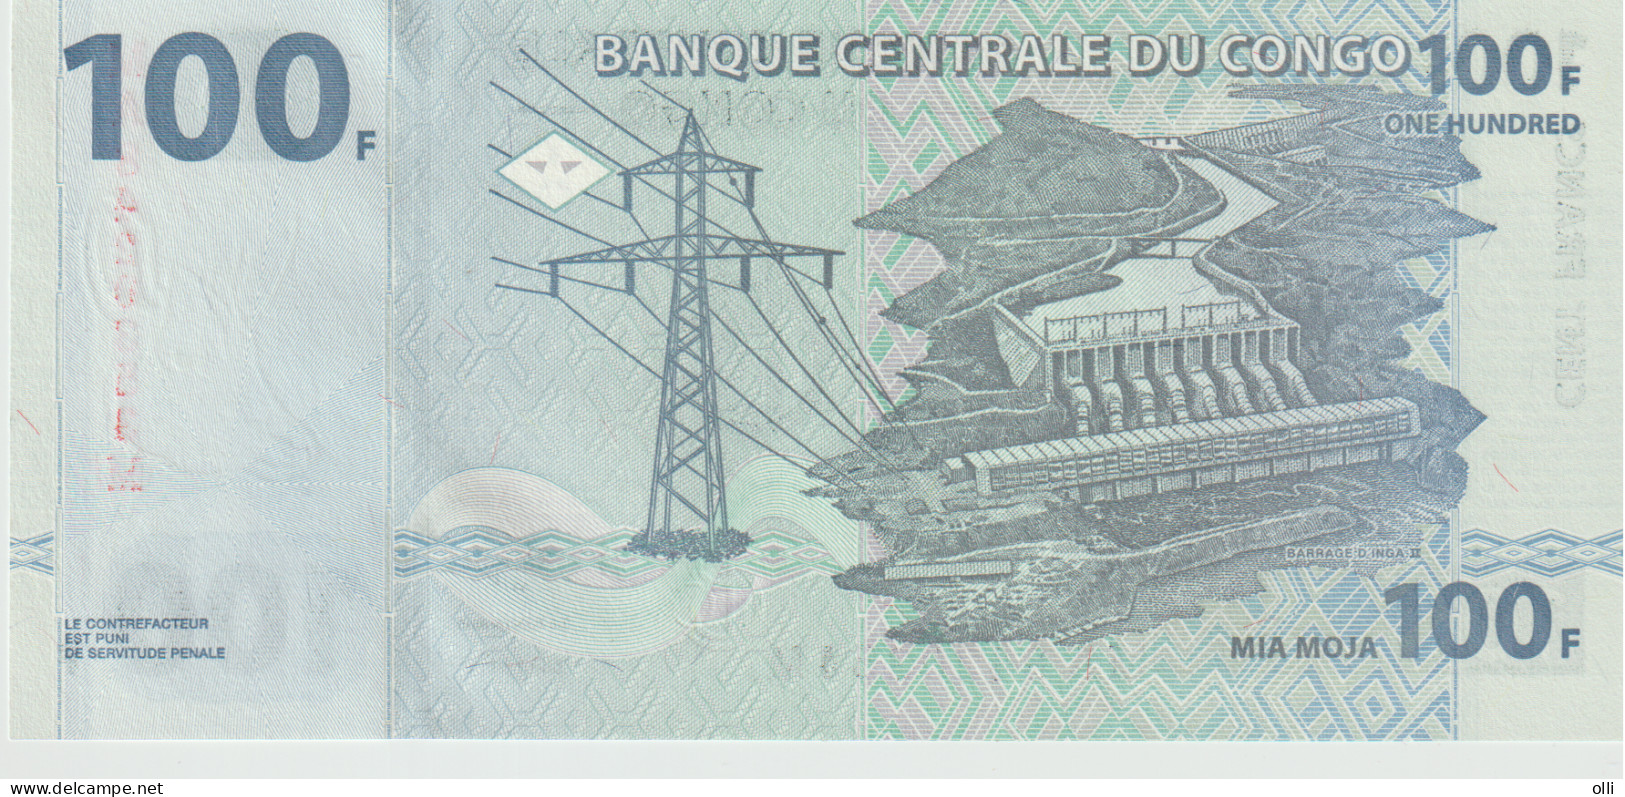 Congo Democratic Republic, 100 Francs, 2000 UNC - Republic Of Congo (Congo-Brazzaville)